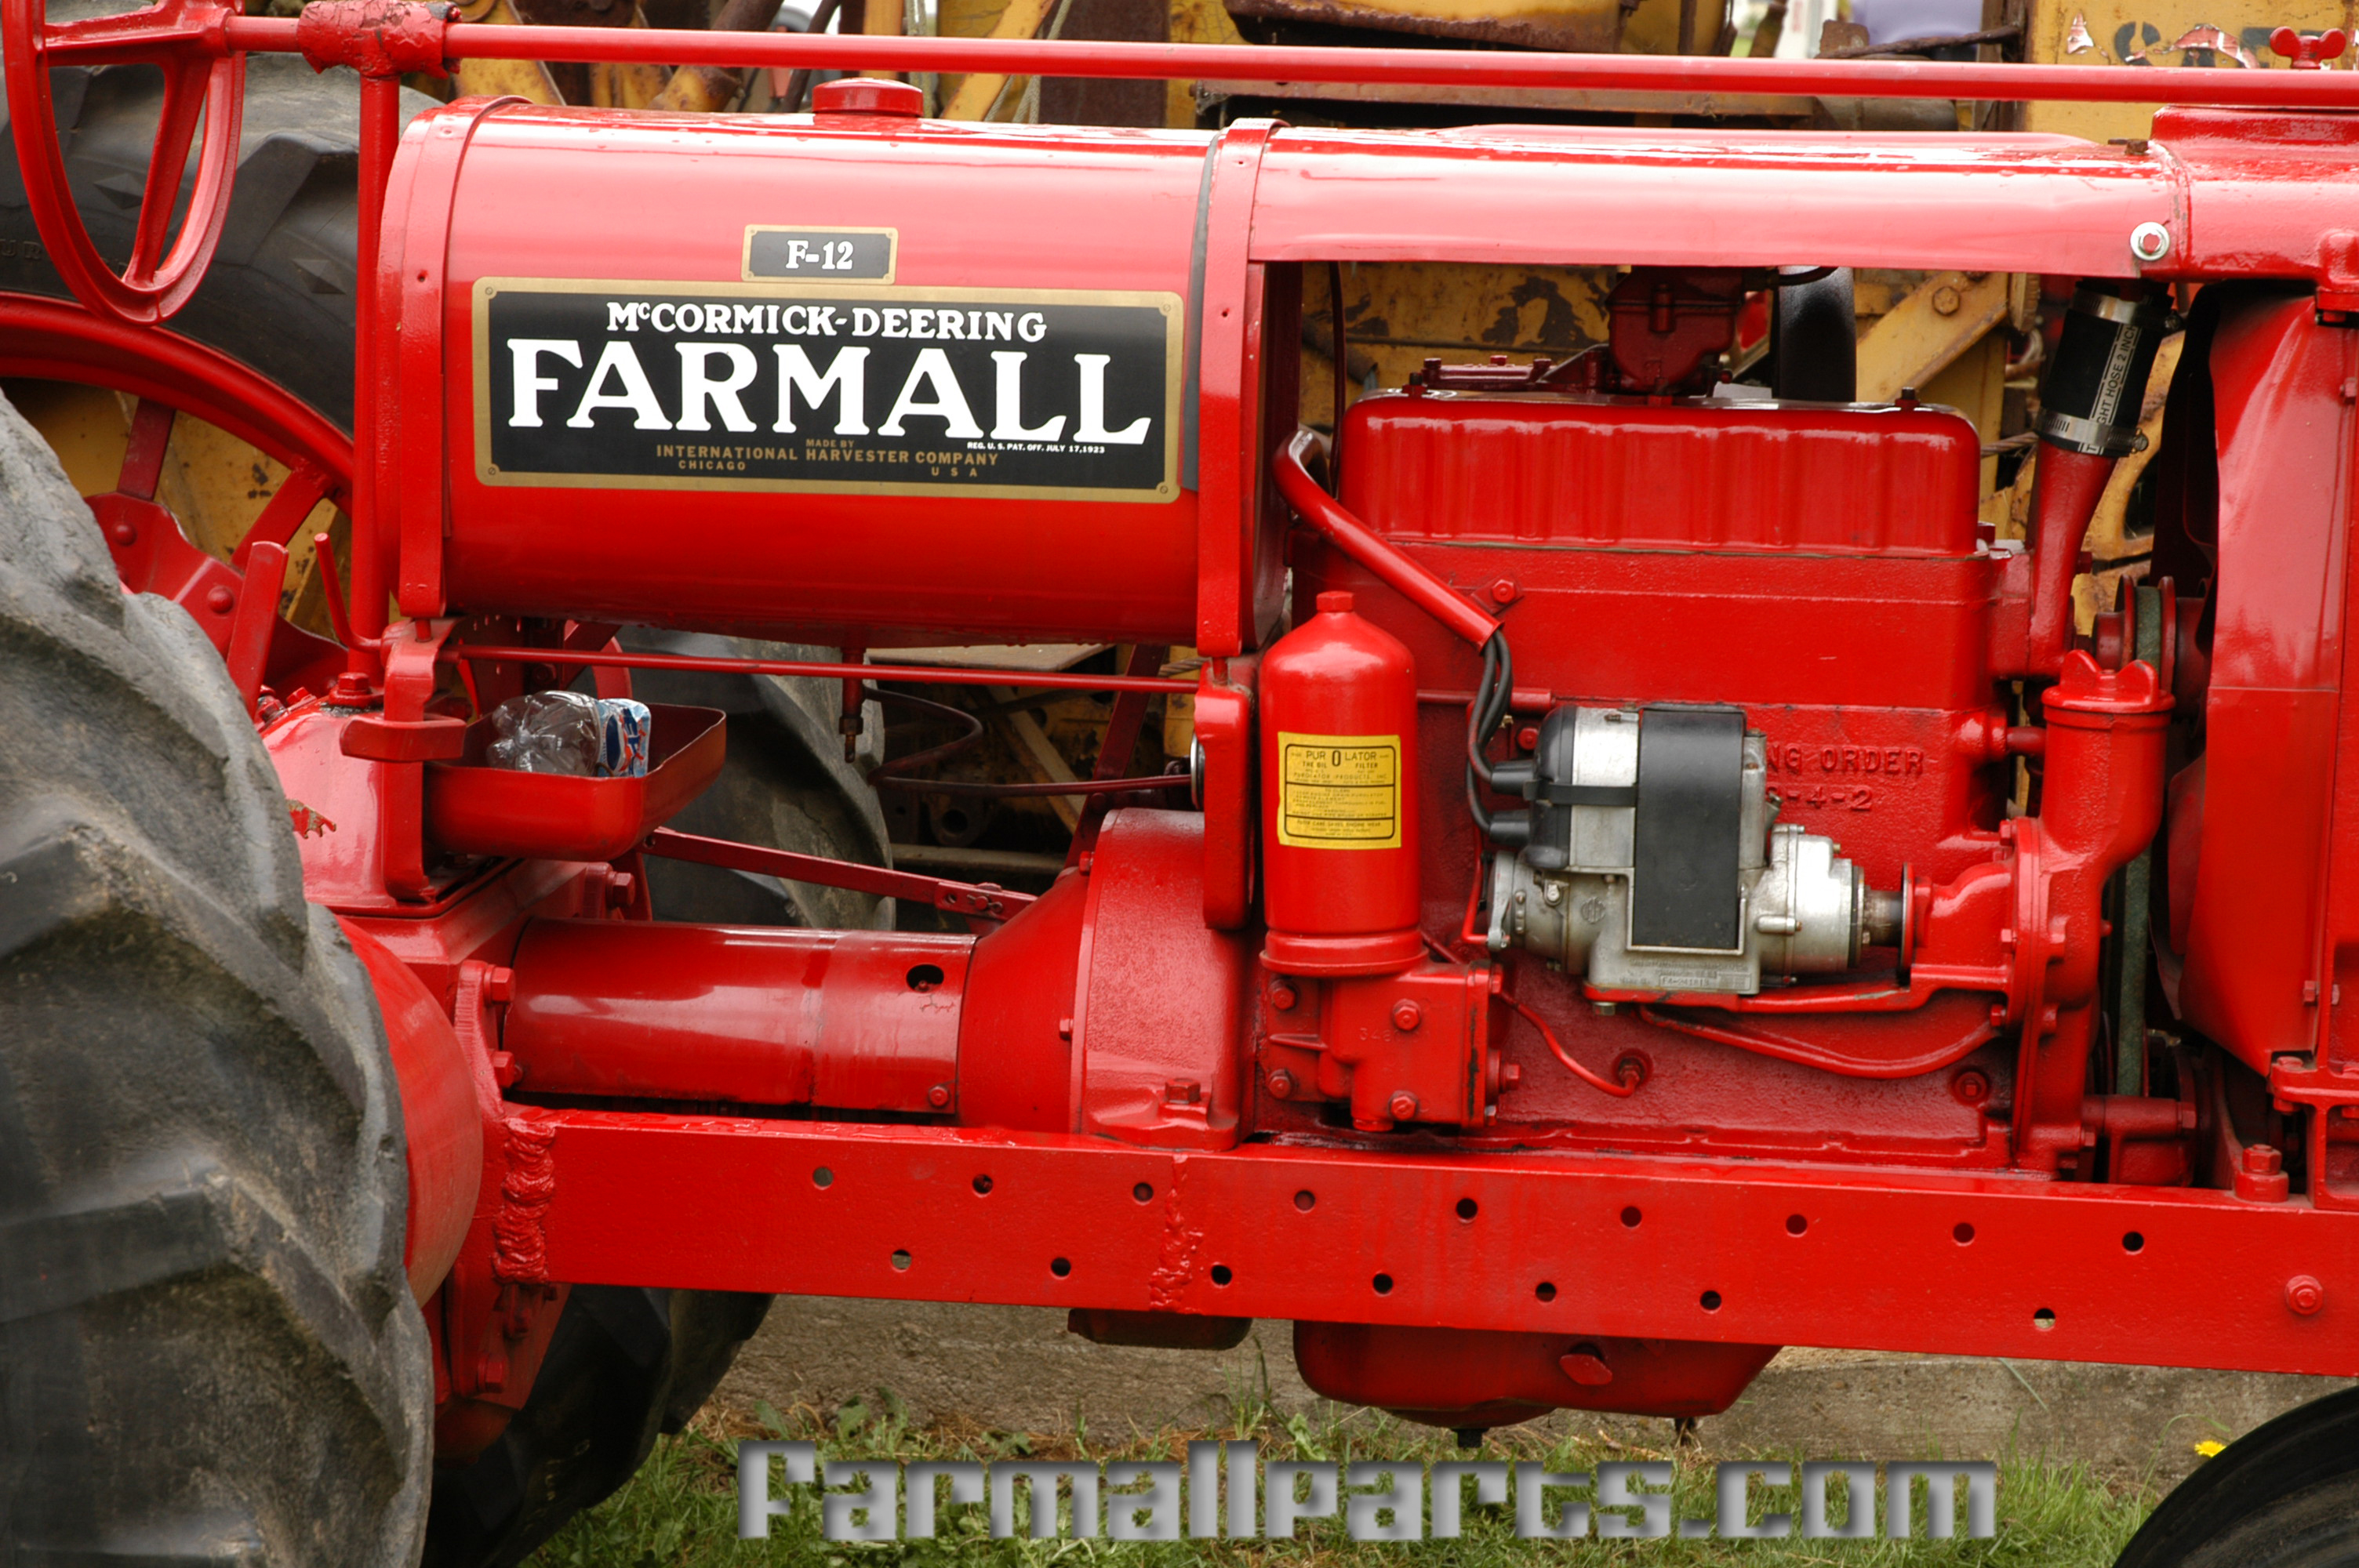 International Harvester Farmall McCormick-Deering Farmall F-12 with Red Paint